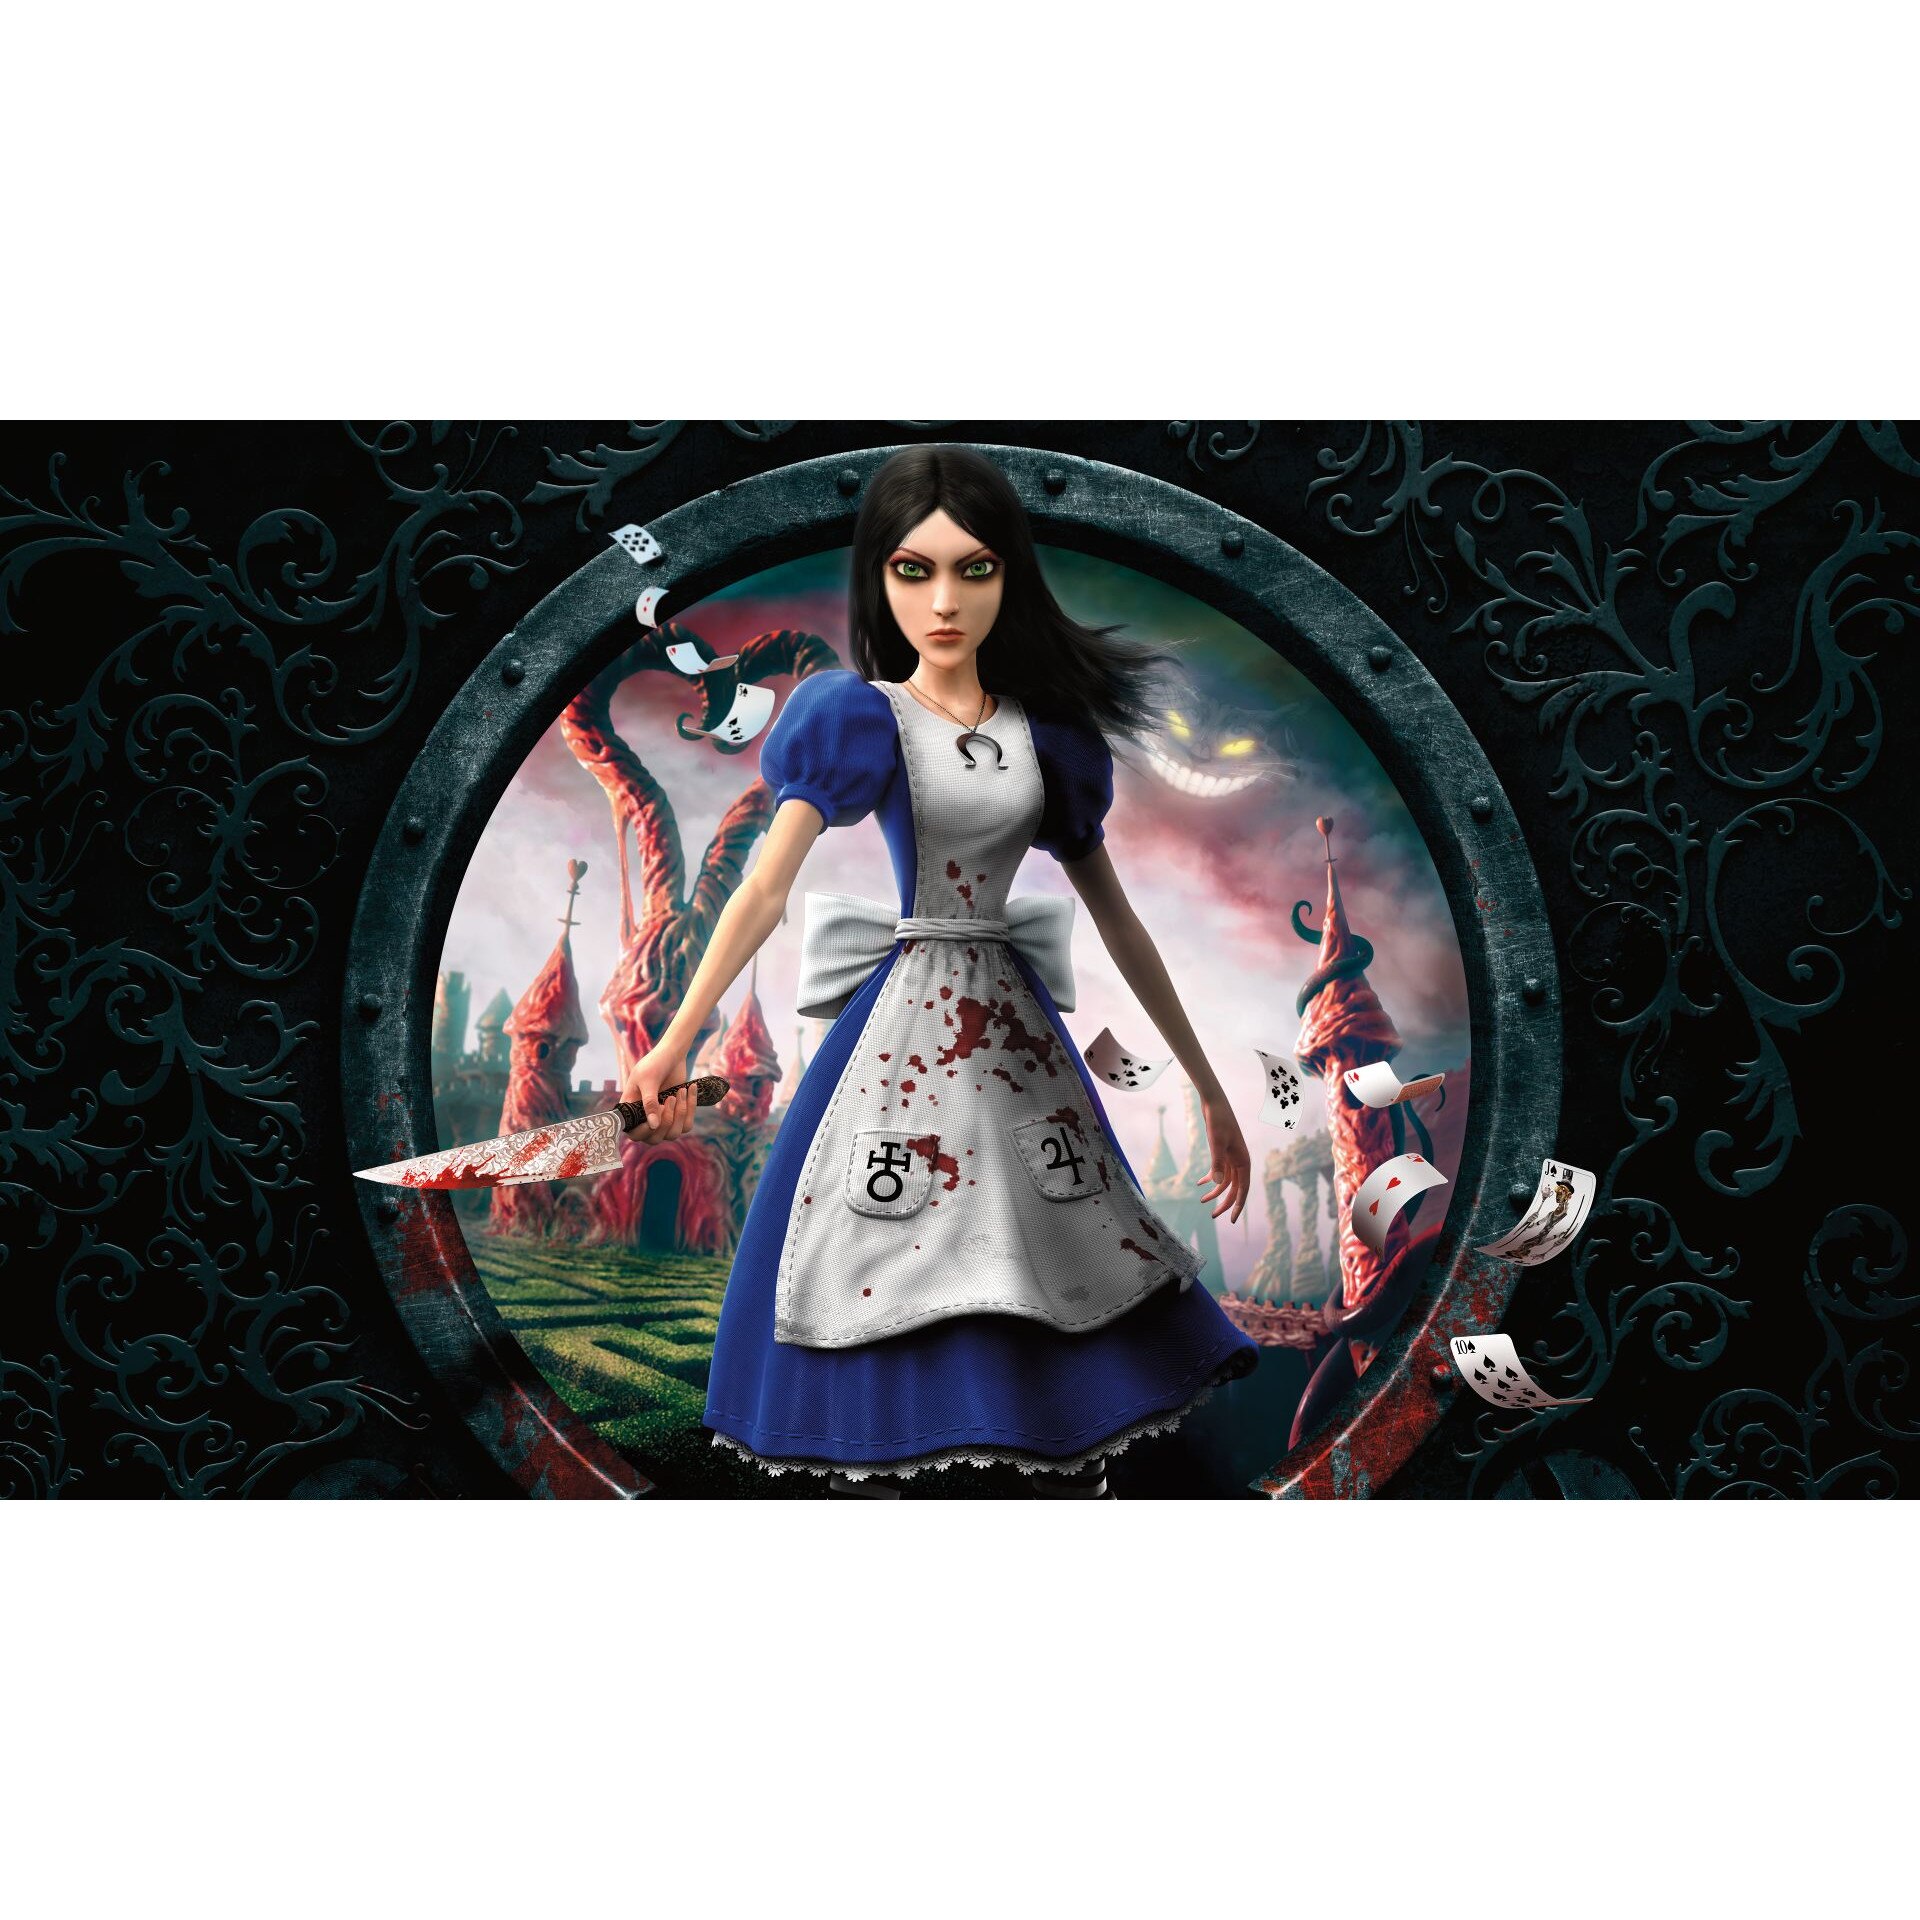 Buy Alice: Madness Returns Origin Key